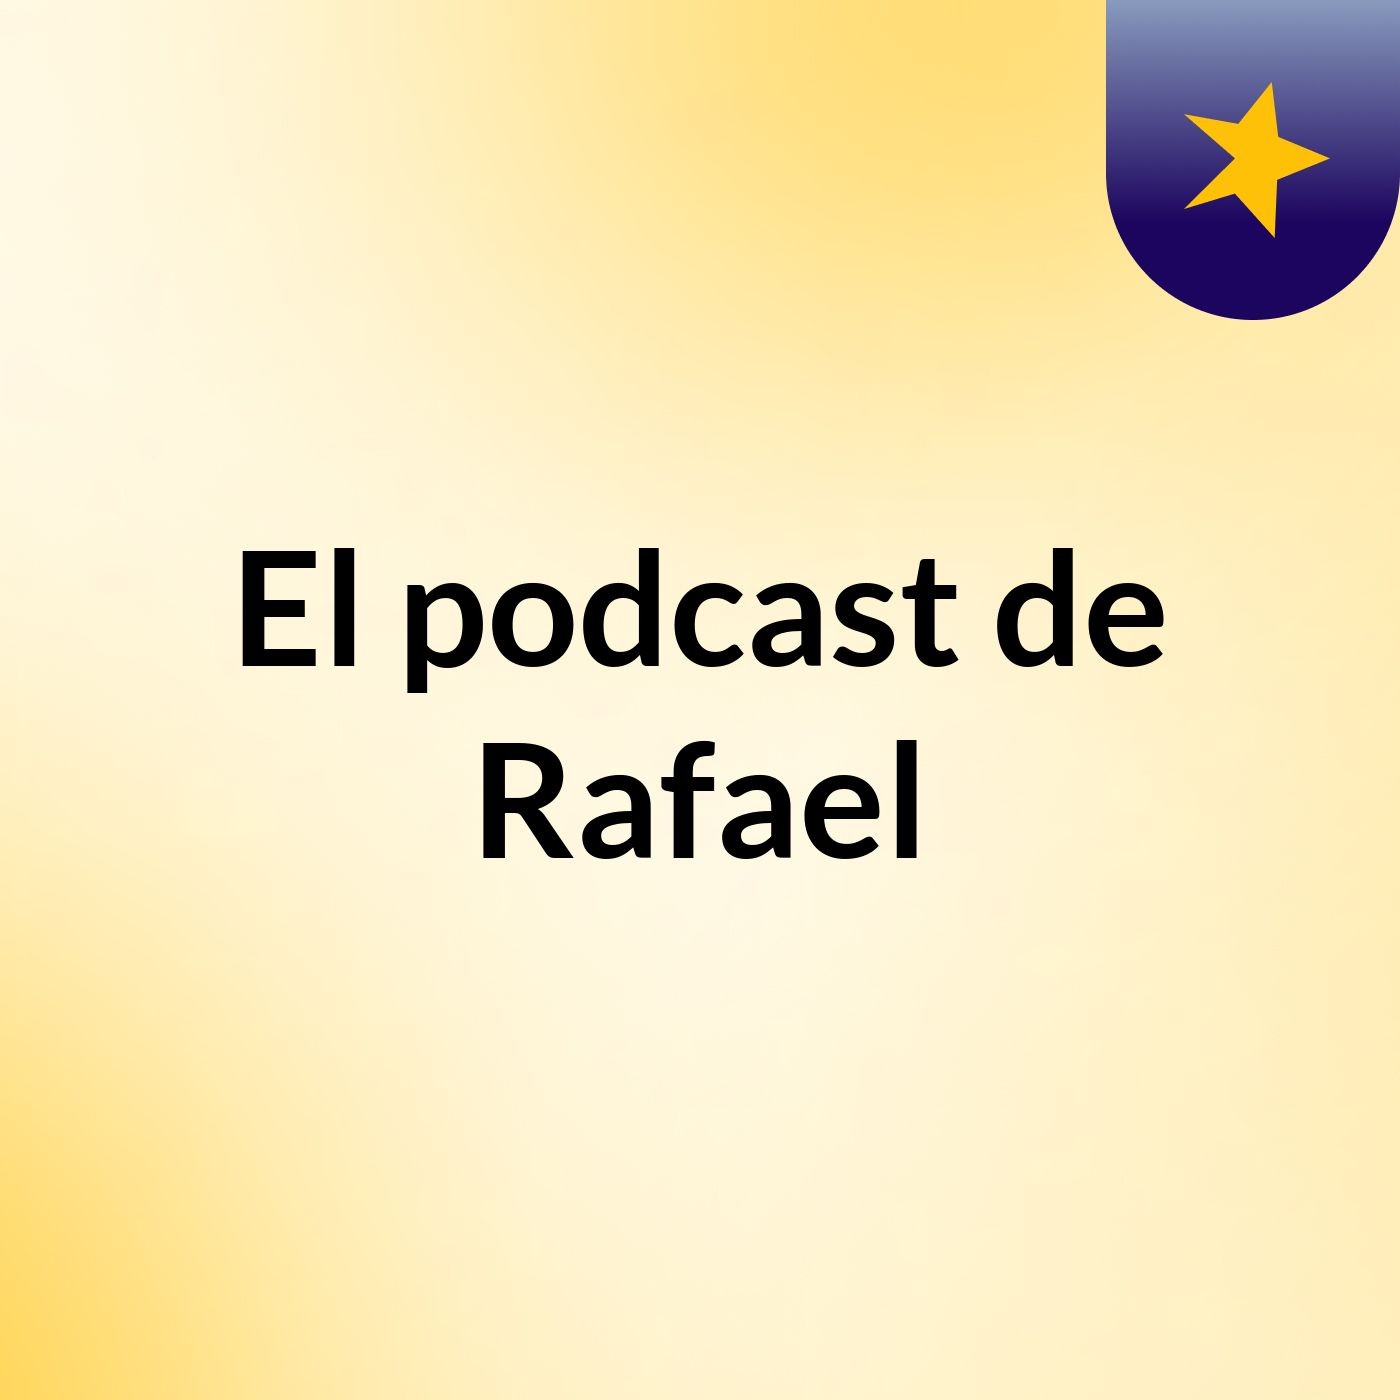 Episodio 3 - El podcast de Rafael